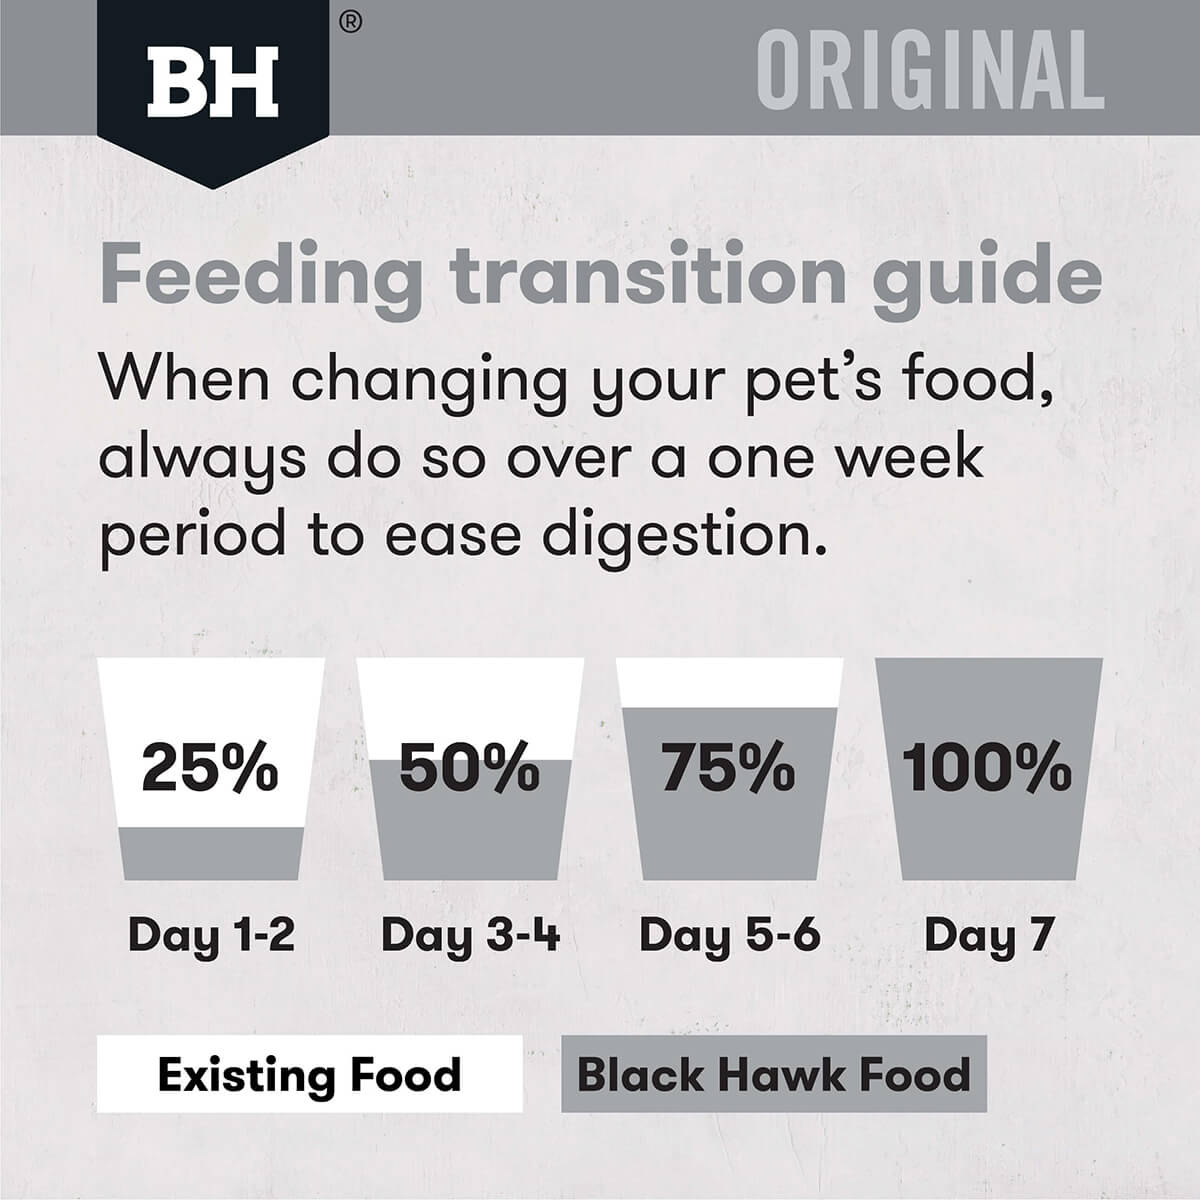 Black Hawk Original Adult Fish & Potato Dry Dog Food (122713000002) [default_color]